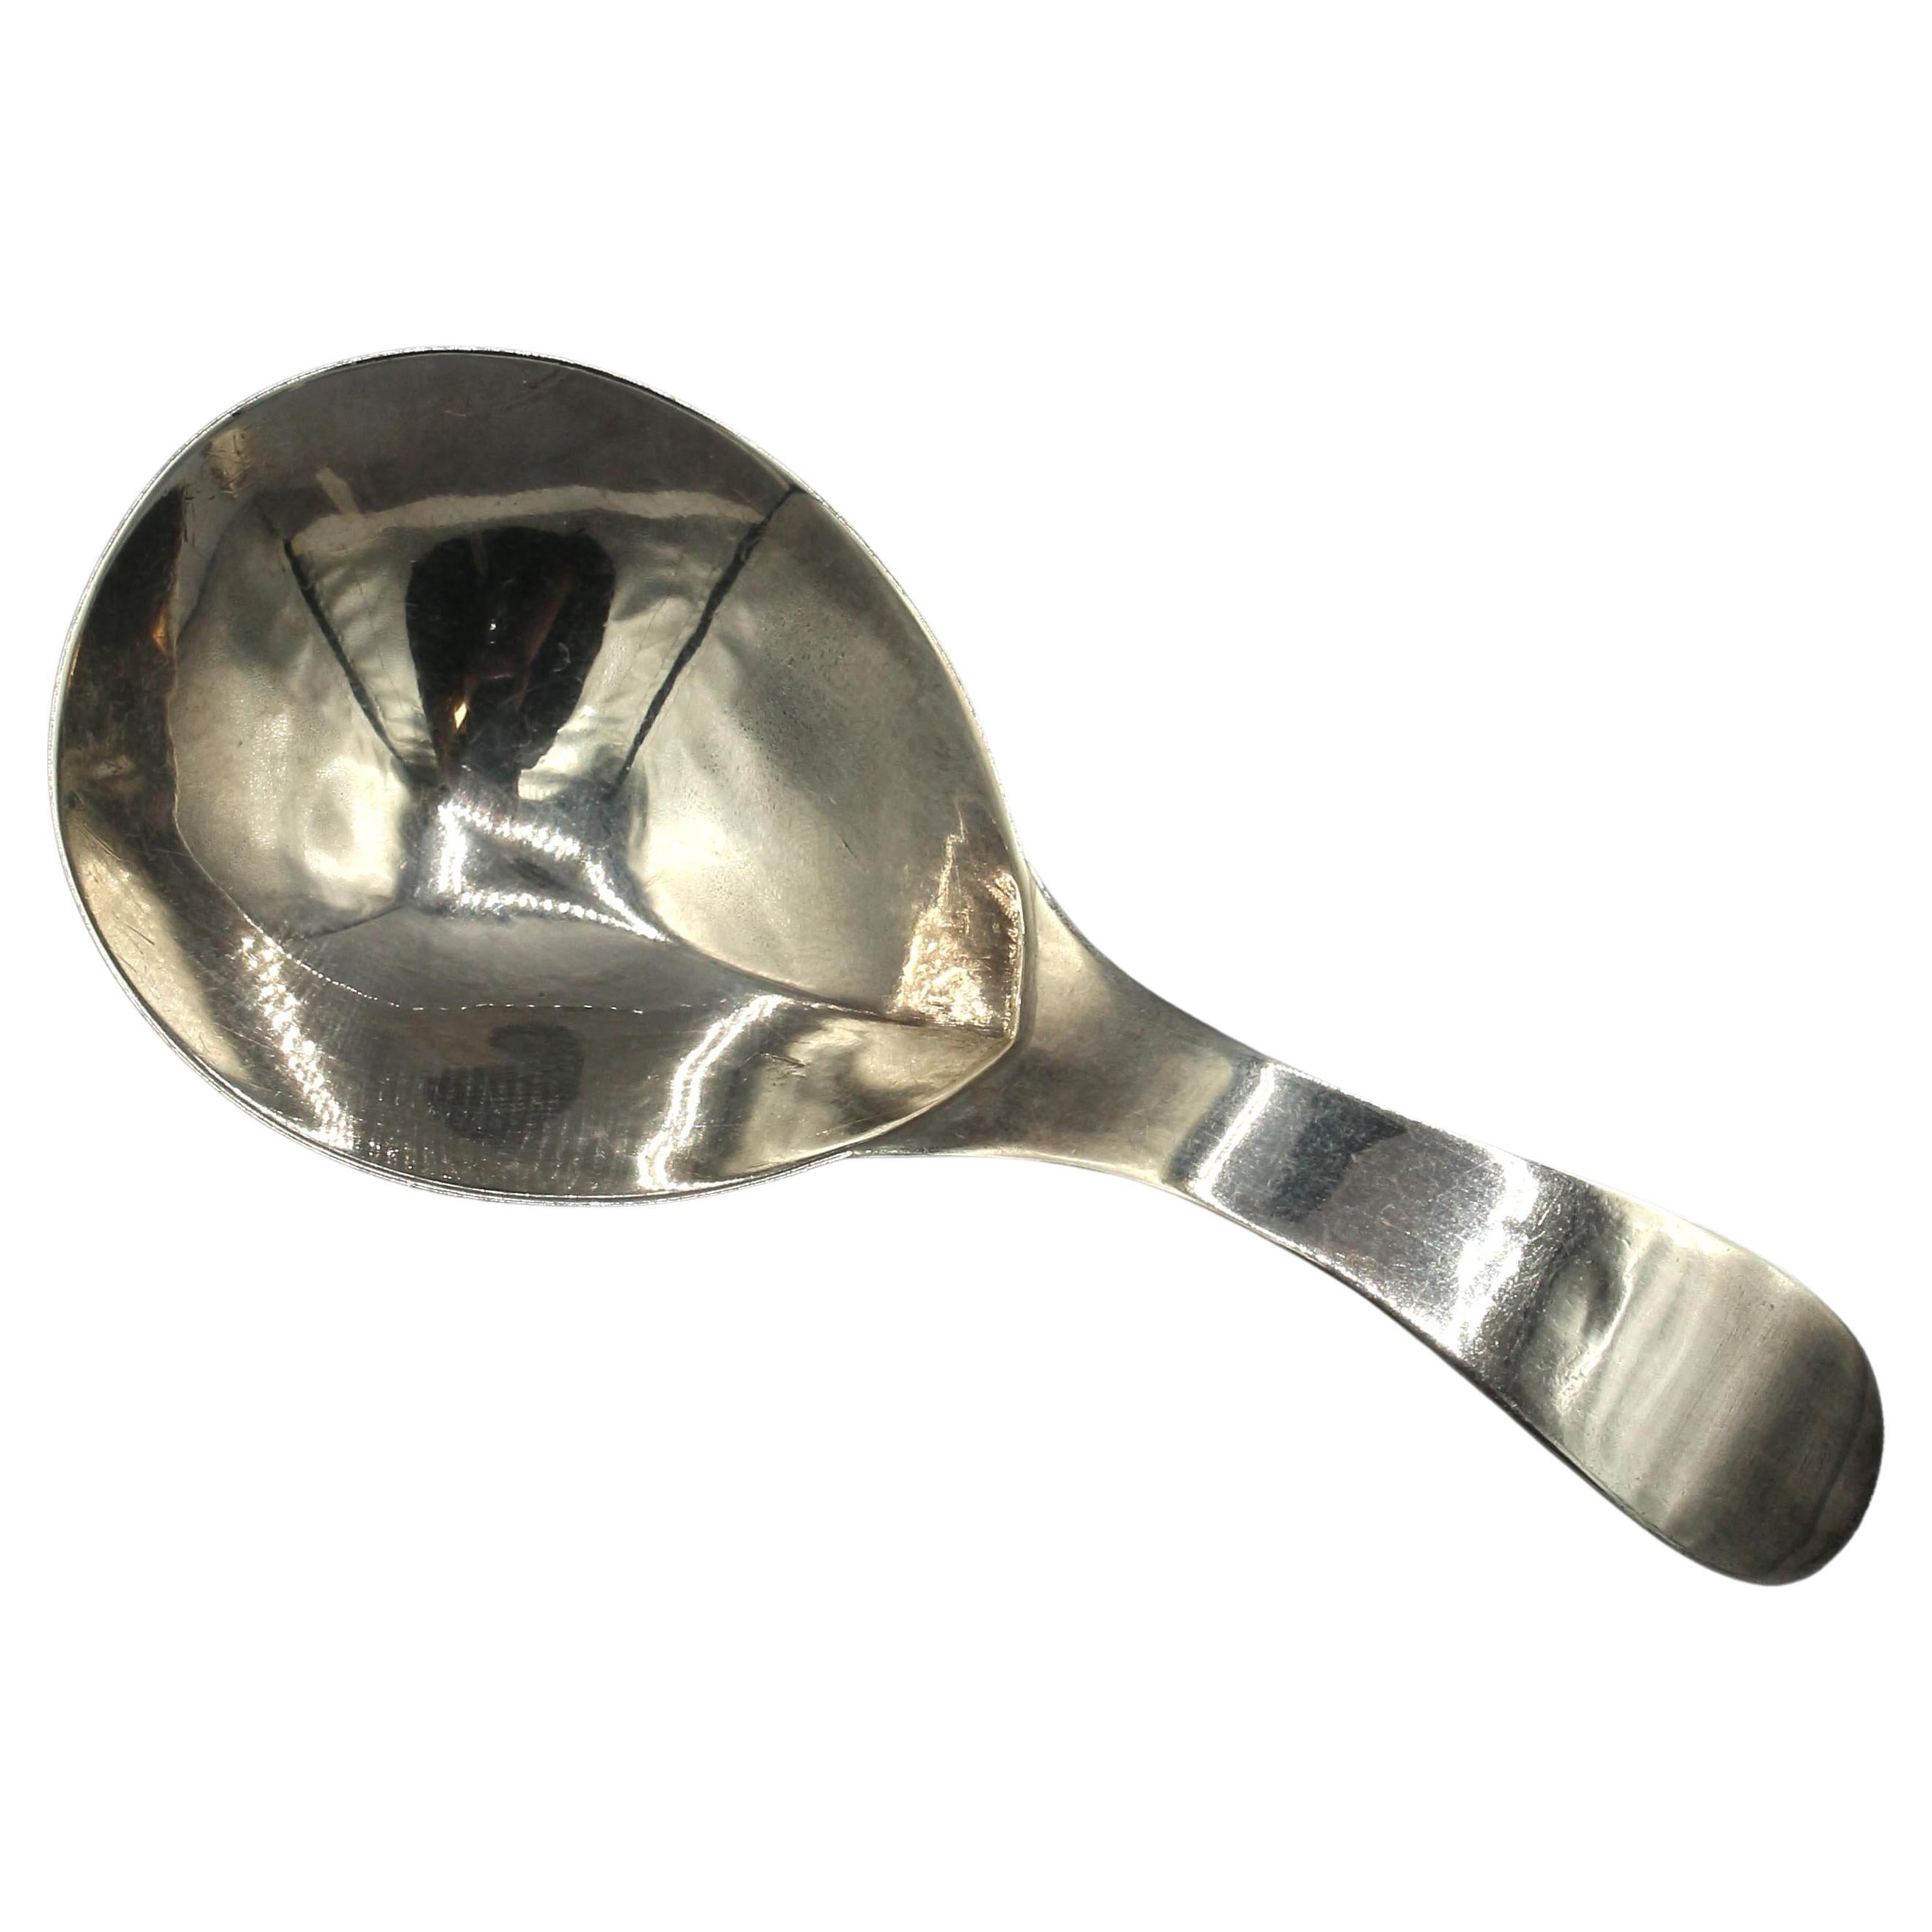 Sterling Silver Tea Caddy Spoon by Hester Bateman, London, 1790